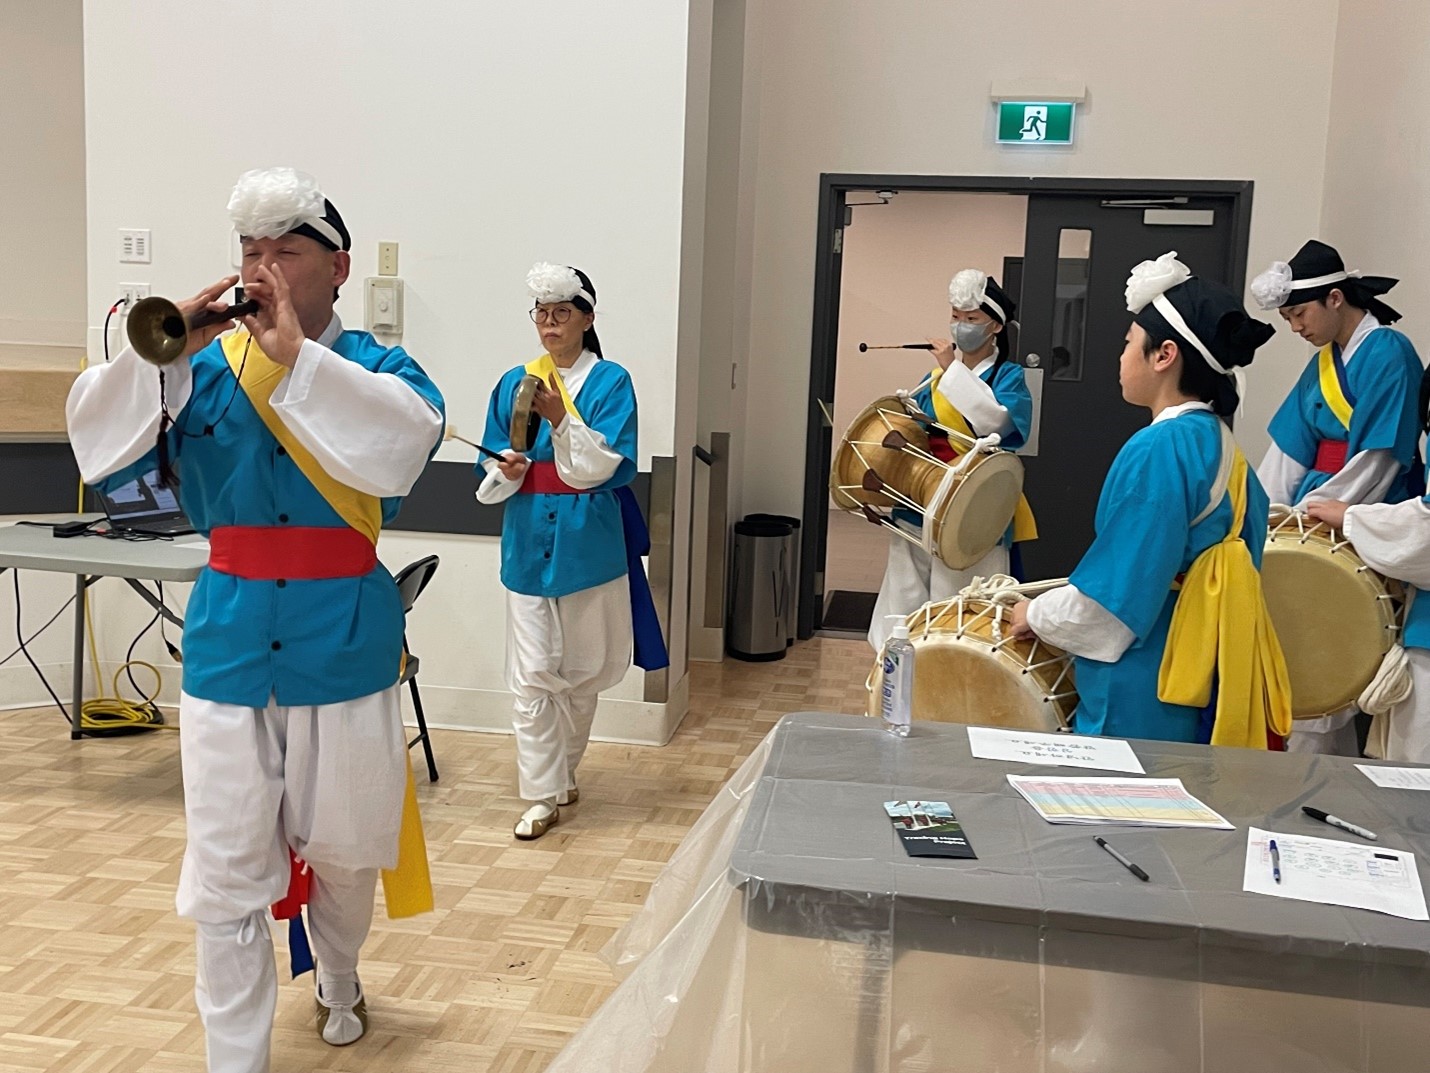 Han Chang-hyeon Korean Traditional Arts Center’s samulnori performance